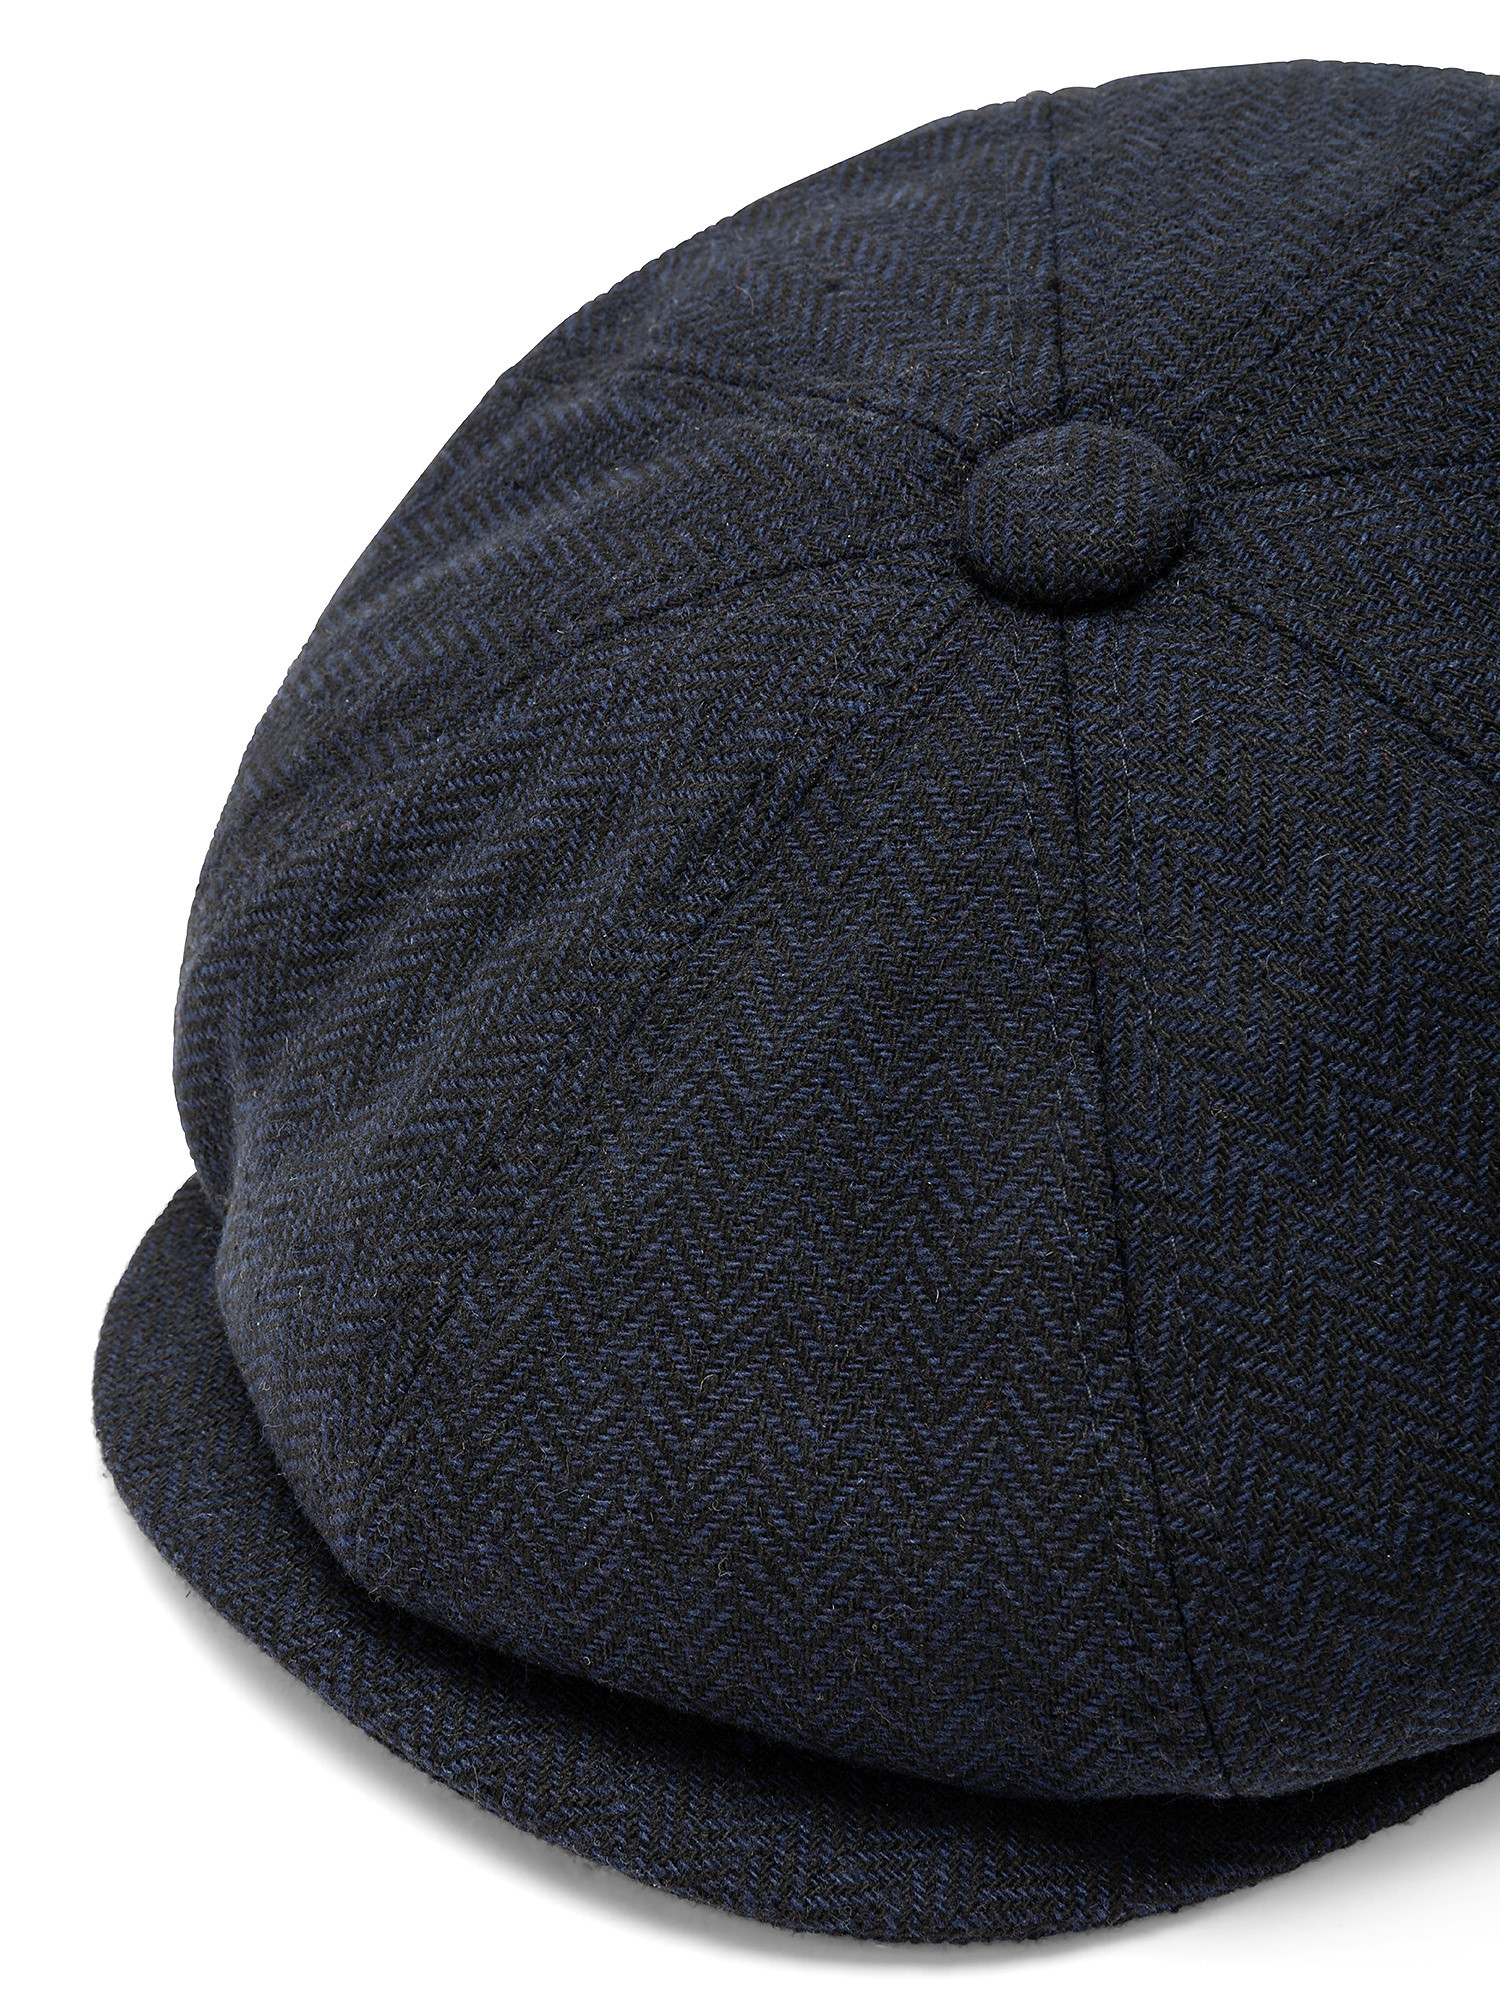 New boy cap, Dark Blue, large image number 1